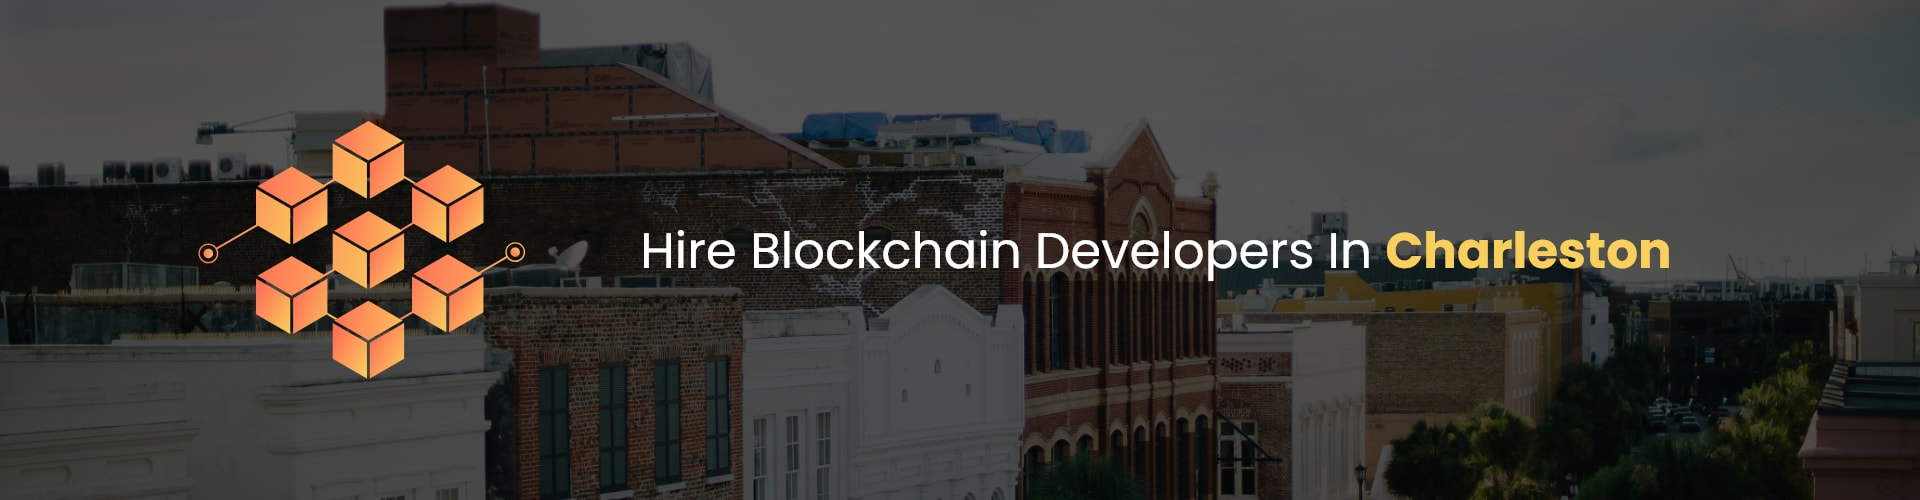 hire blockchain developers in charleston